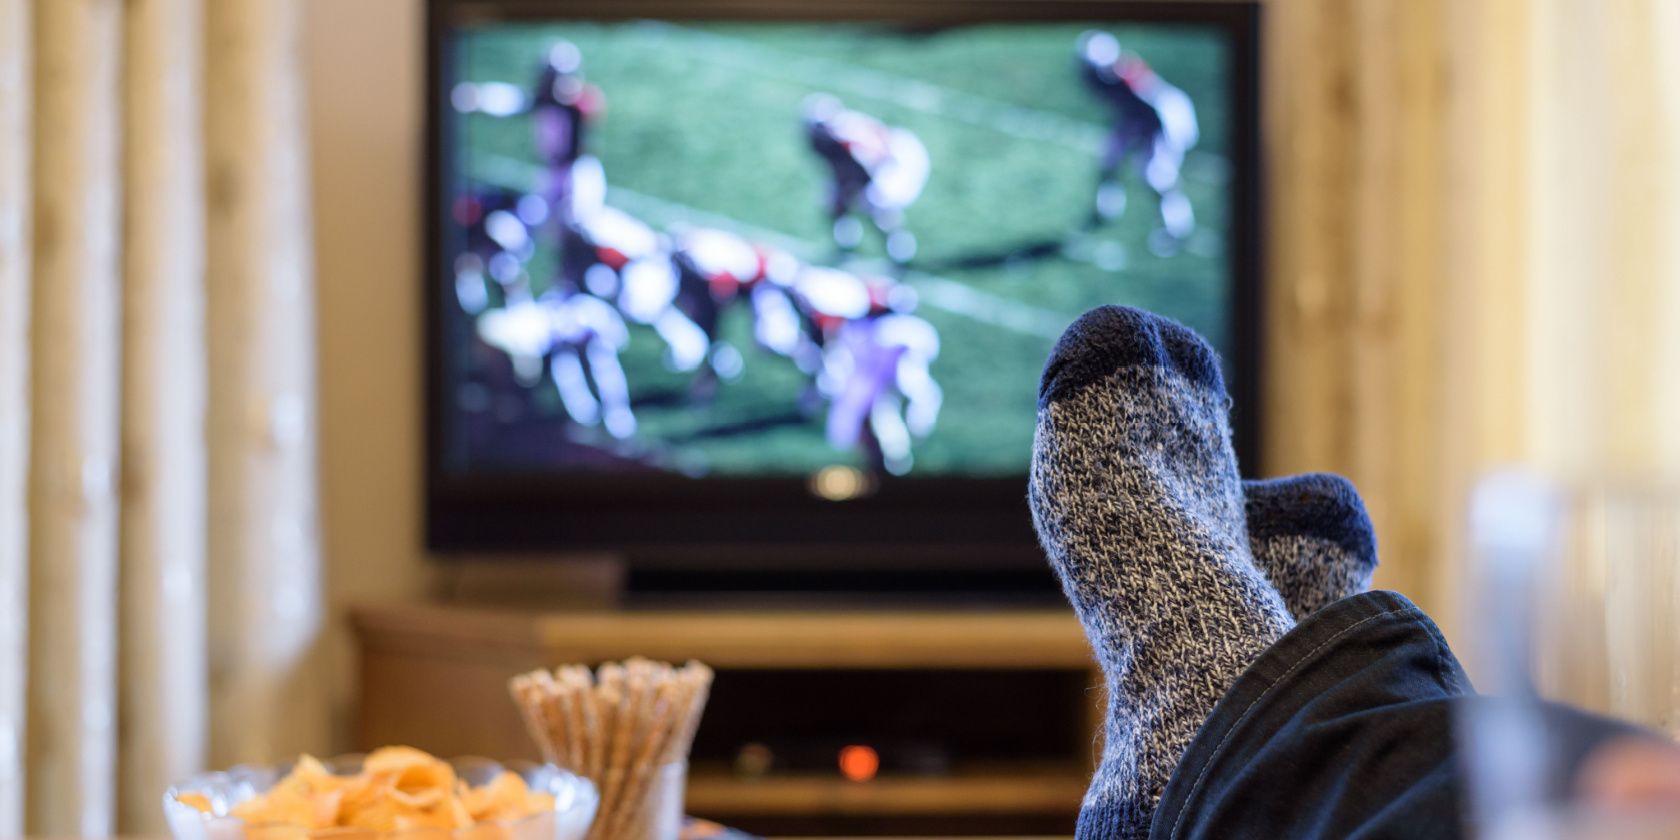 A man watching American football on TV